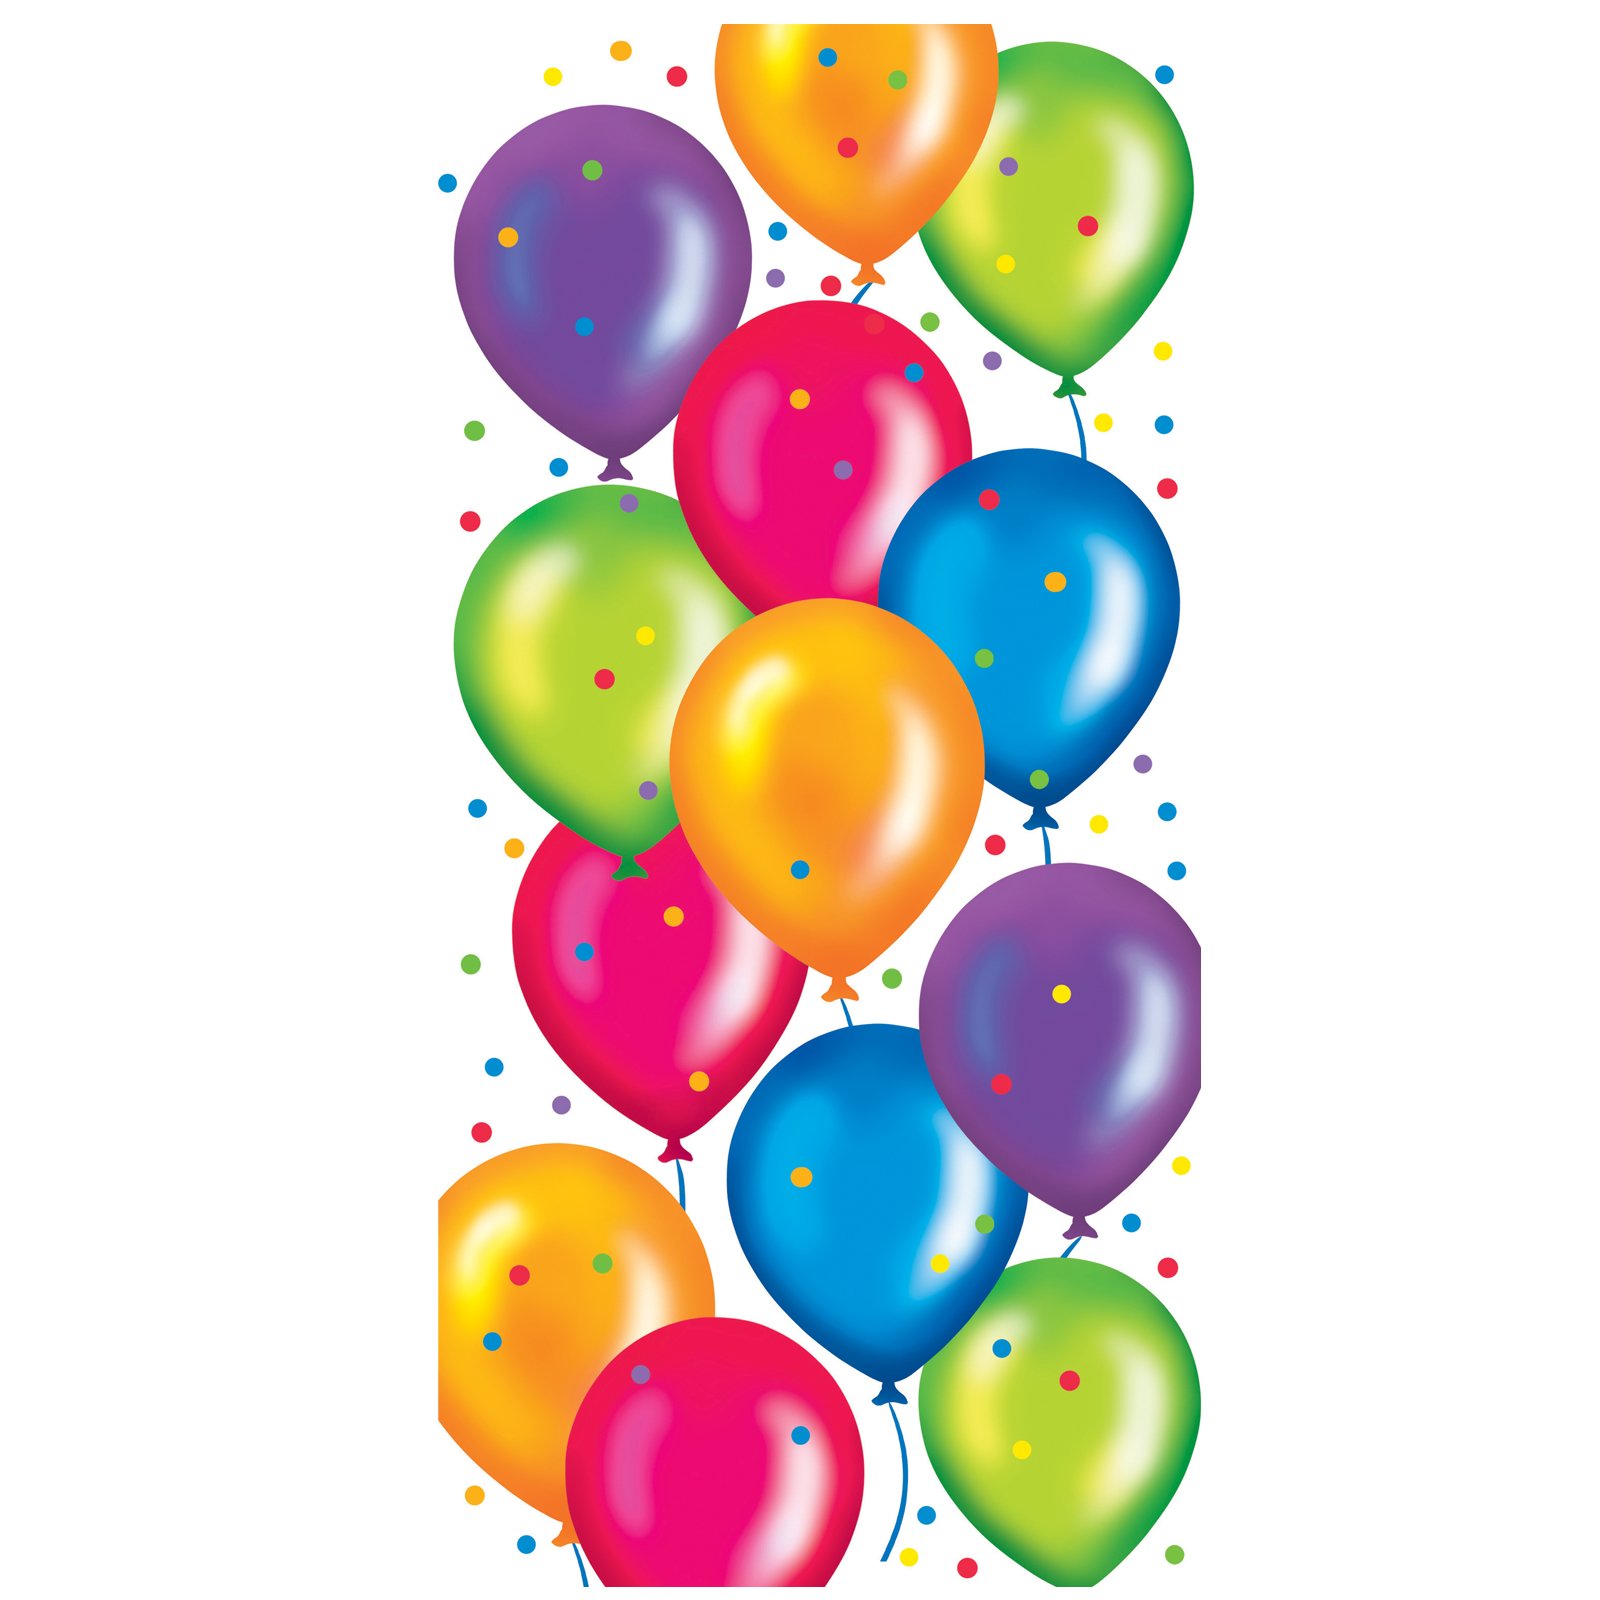 Birthday Balloon Images